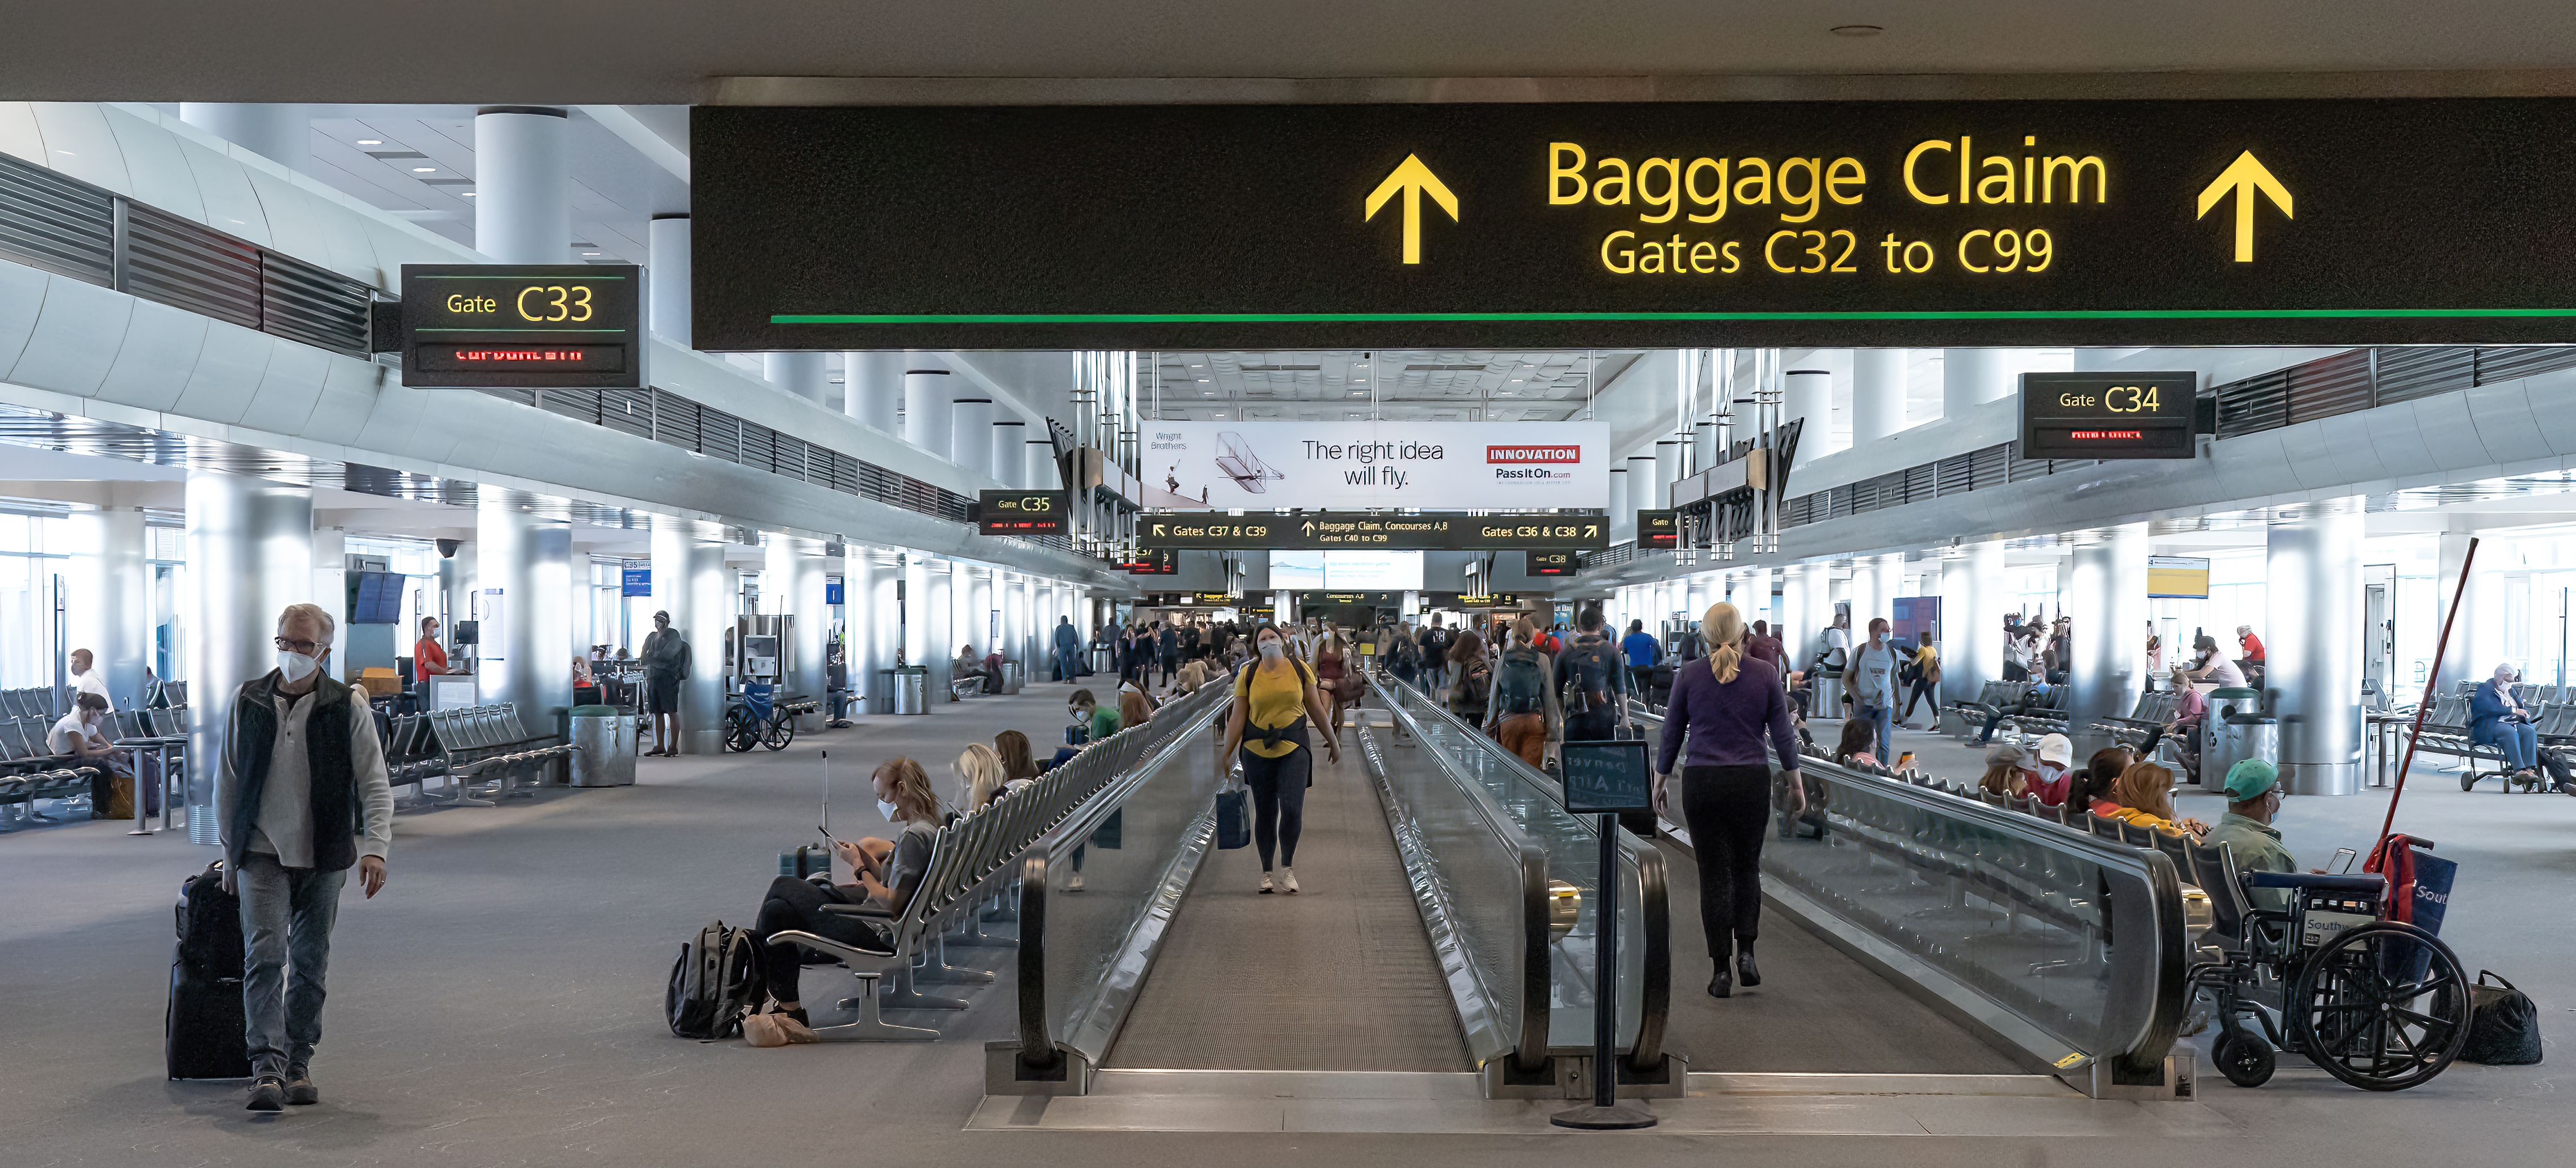 The baggage claim at Denver International Airport